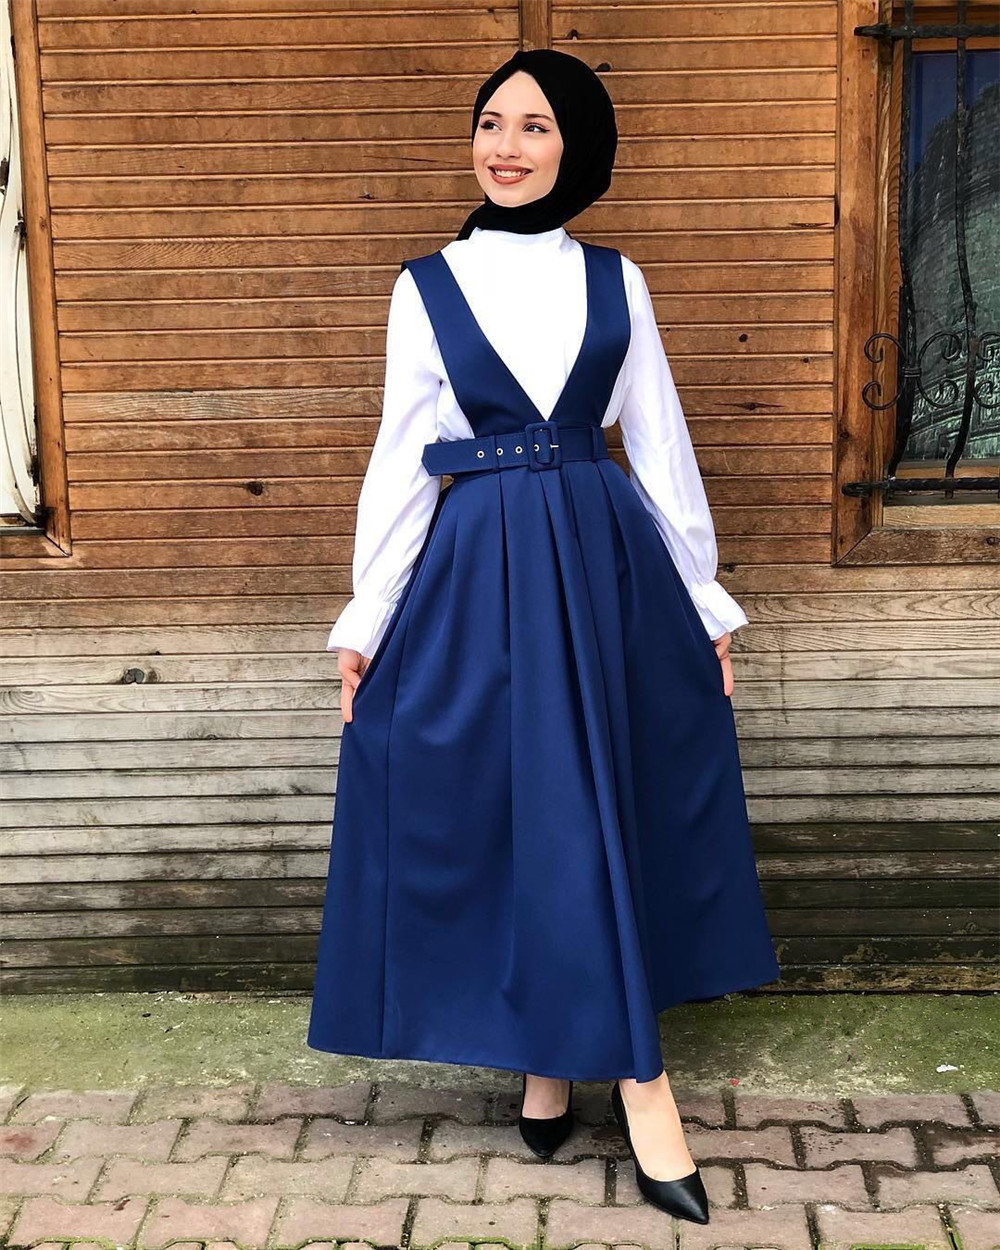 Fashion colorful strap skirt for women islamic gift for girls morocco Elegant strap skirt for woman islamic dress